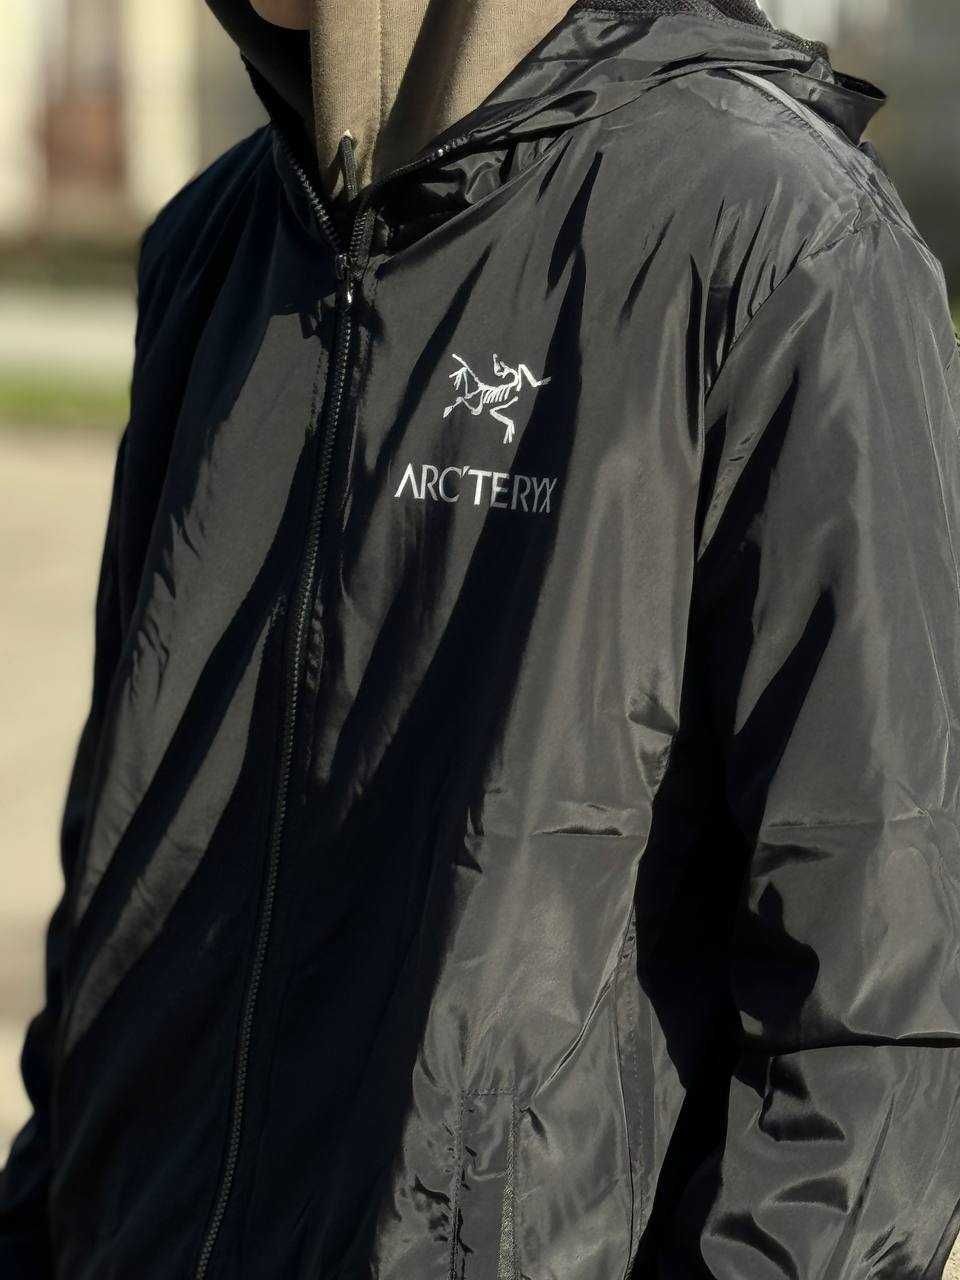 Куртка мужская черная Артерикс - Arcteryx мужская куртка новая GoreTex